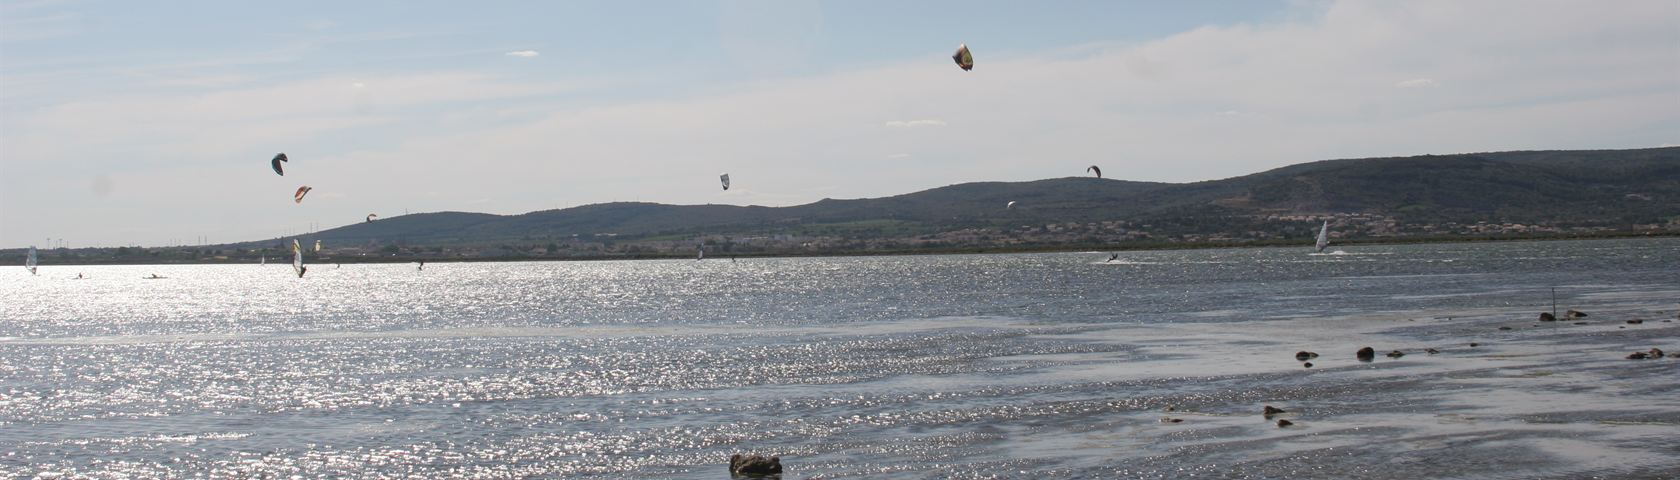 Kite Surfing in the Distance